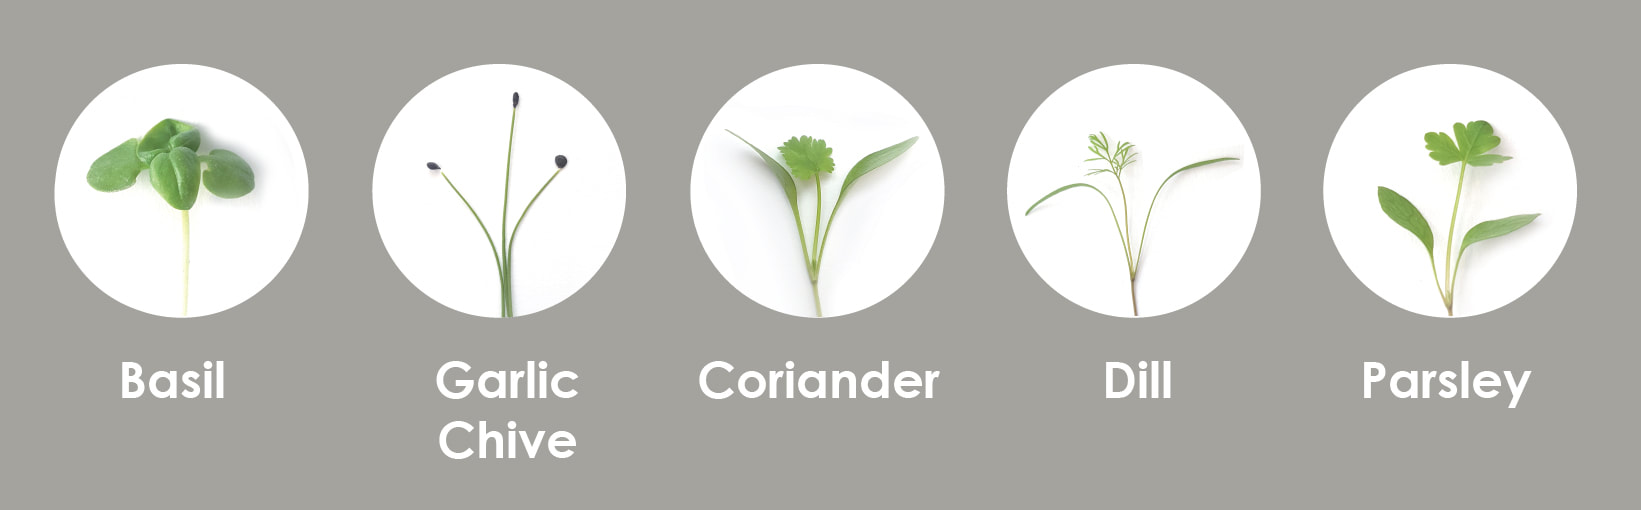 Broccoli, Pea, Radish China Rose, Rocket, Sunflower microgreens seedlings